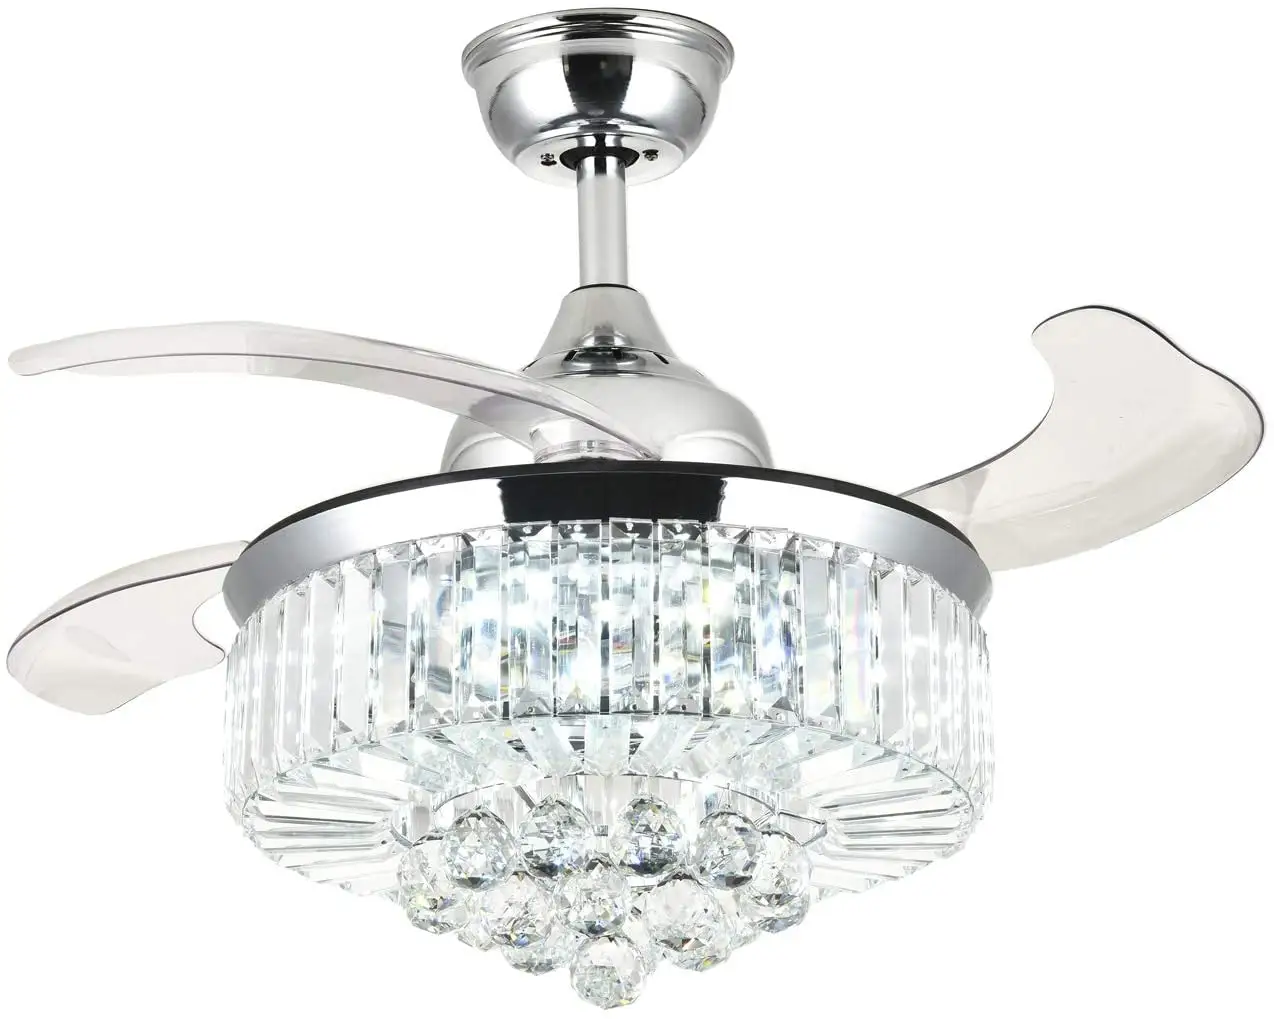 Adjustable light crystal ceiling fan remote control modern invisible telescopic chandelier fan led ceiling fan lamp